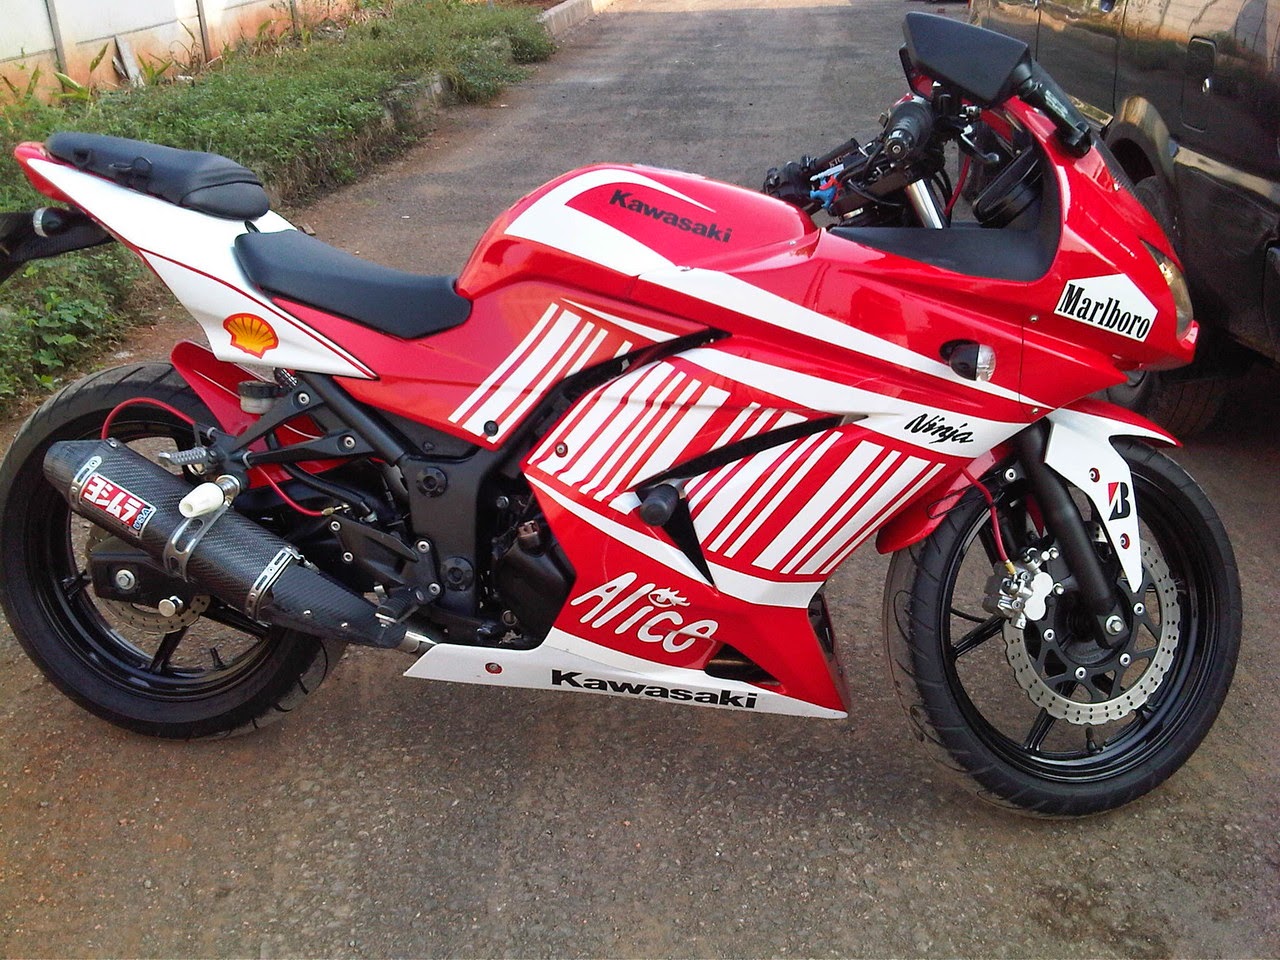 Modifikasi Motor Kawasaki Ninja 250 Warna Merah